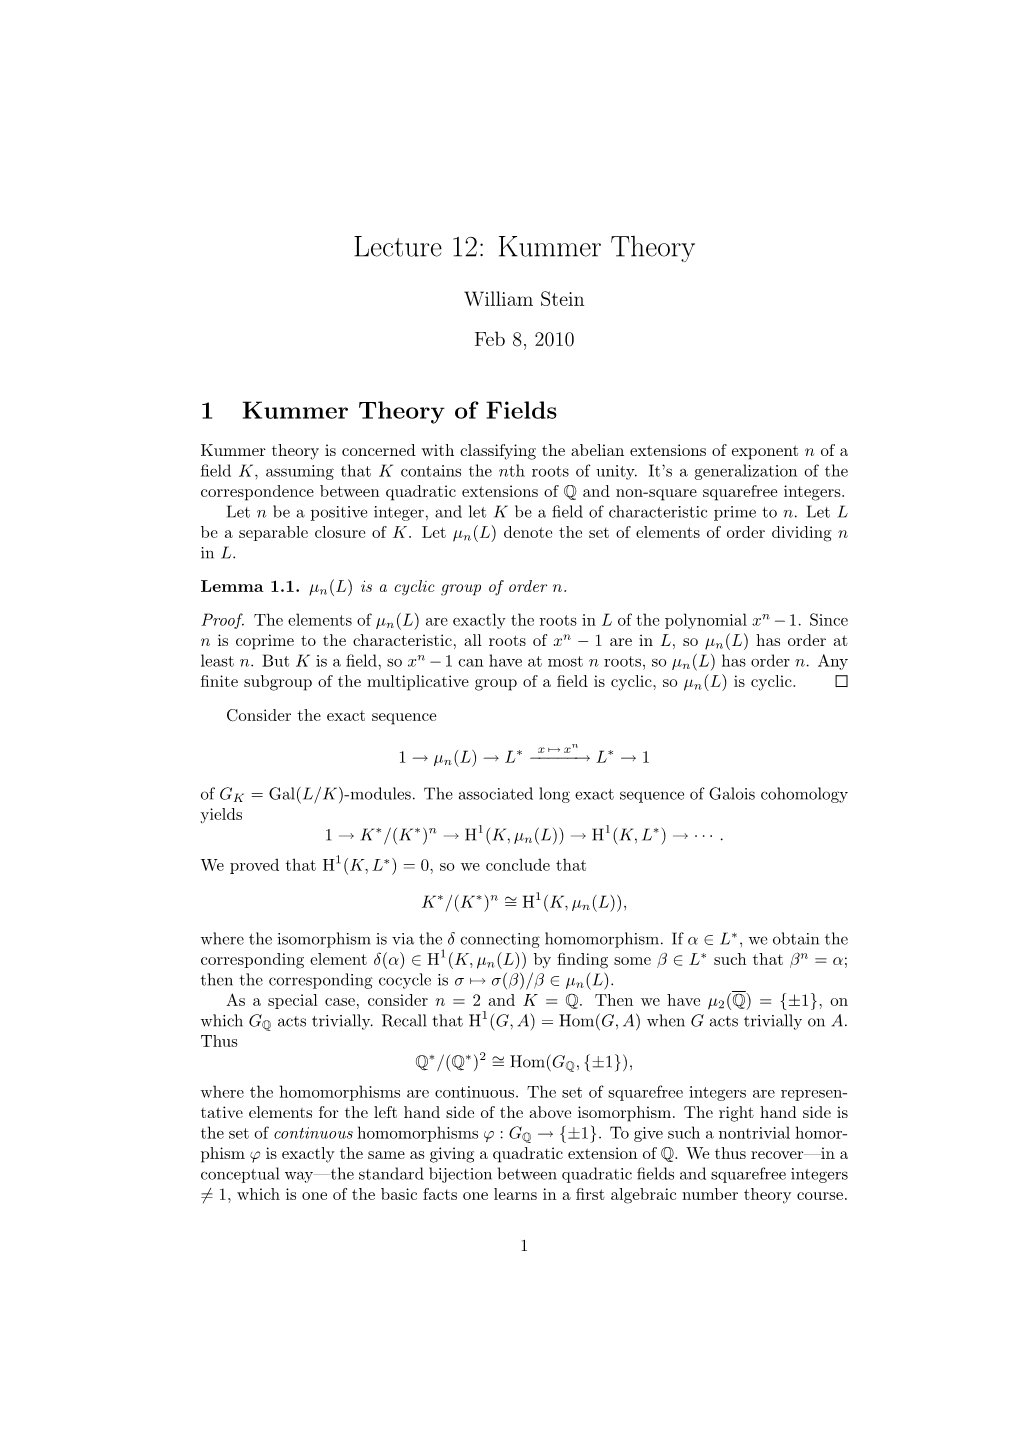 Kummer Theory